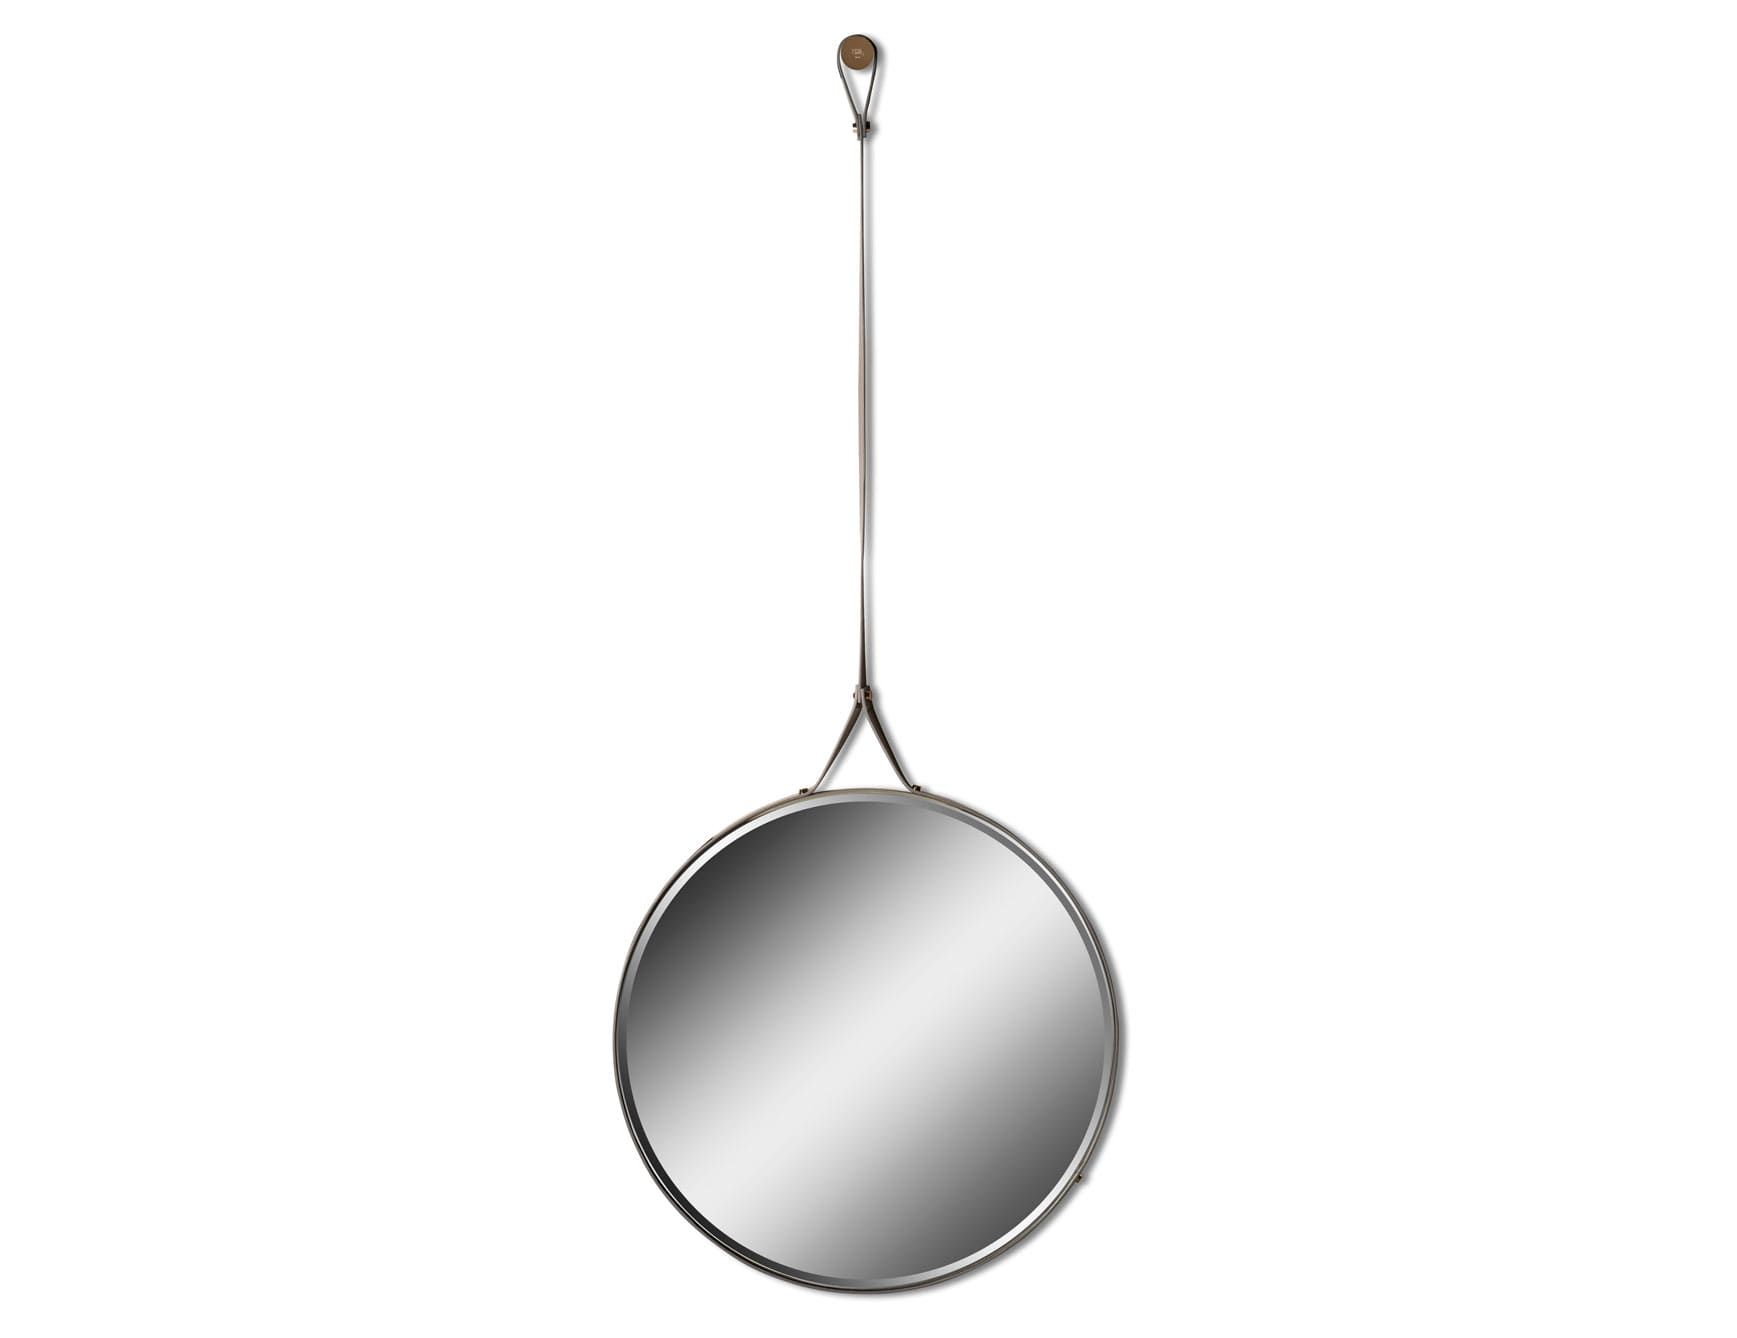 Monocole contemporary Italian mirror with grey glass